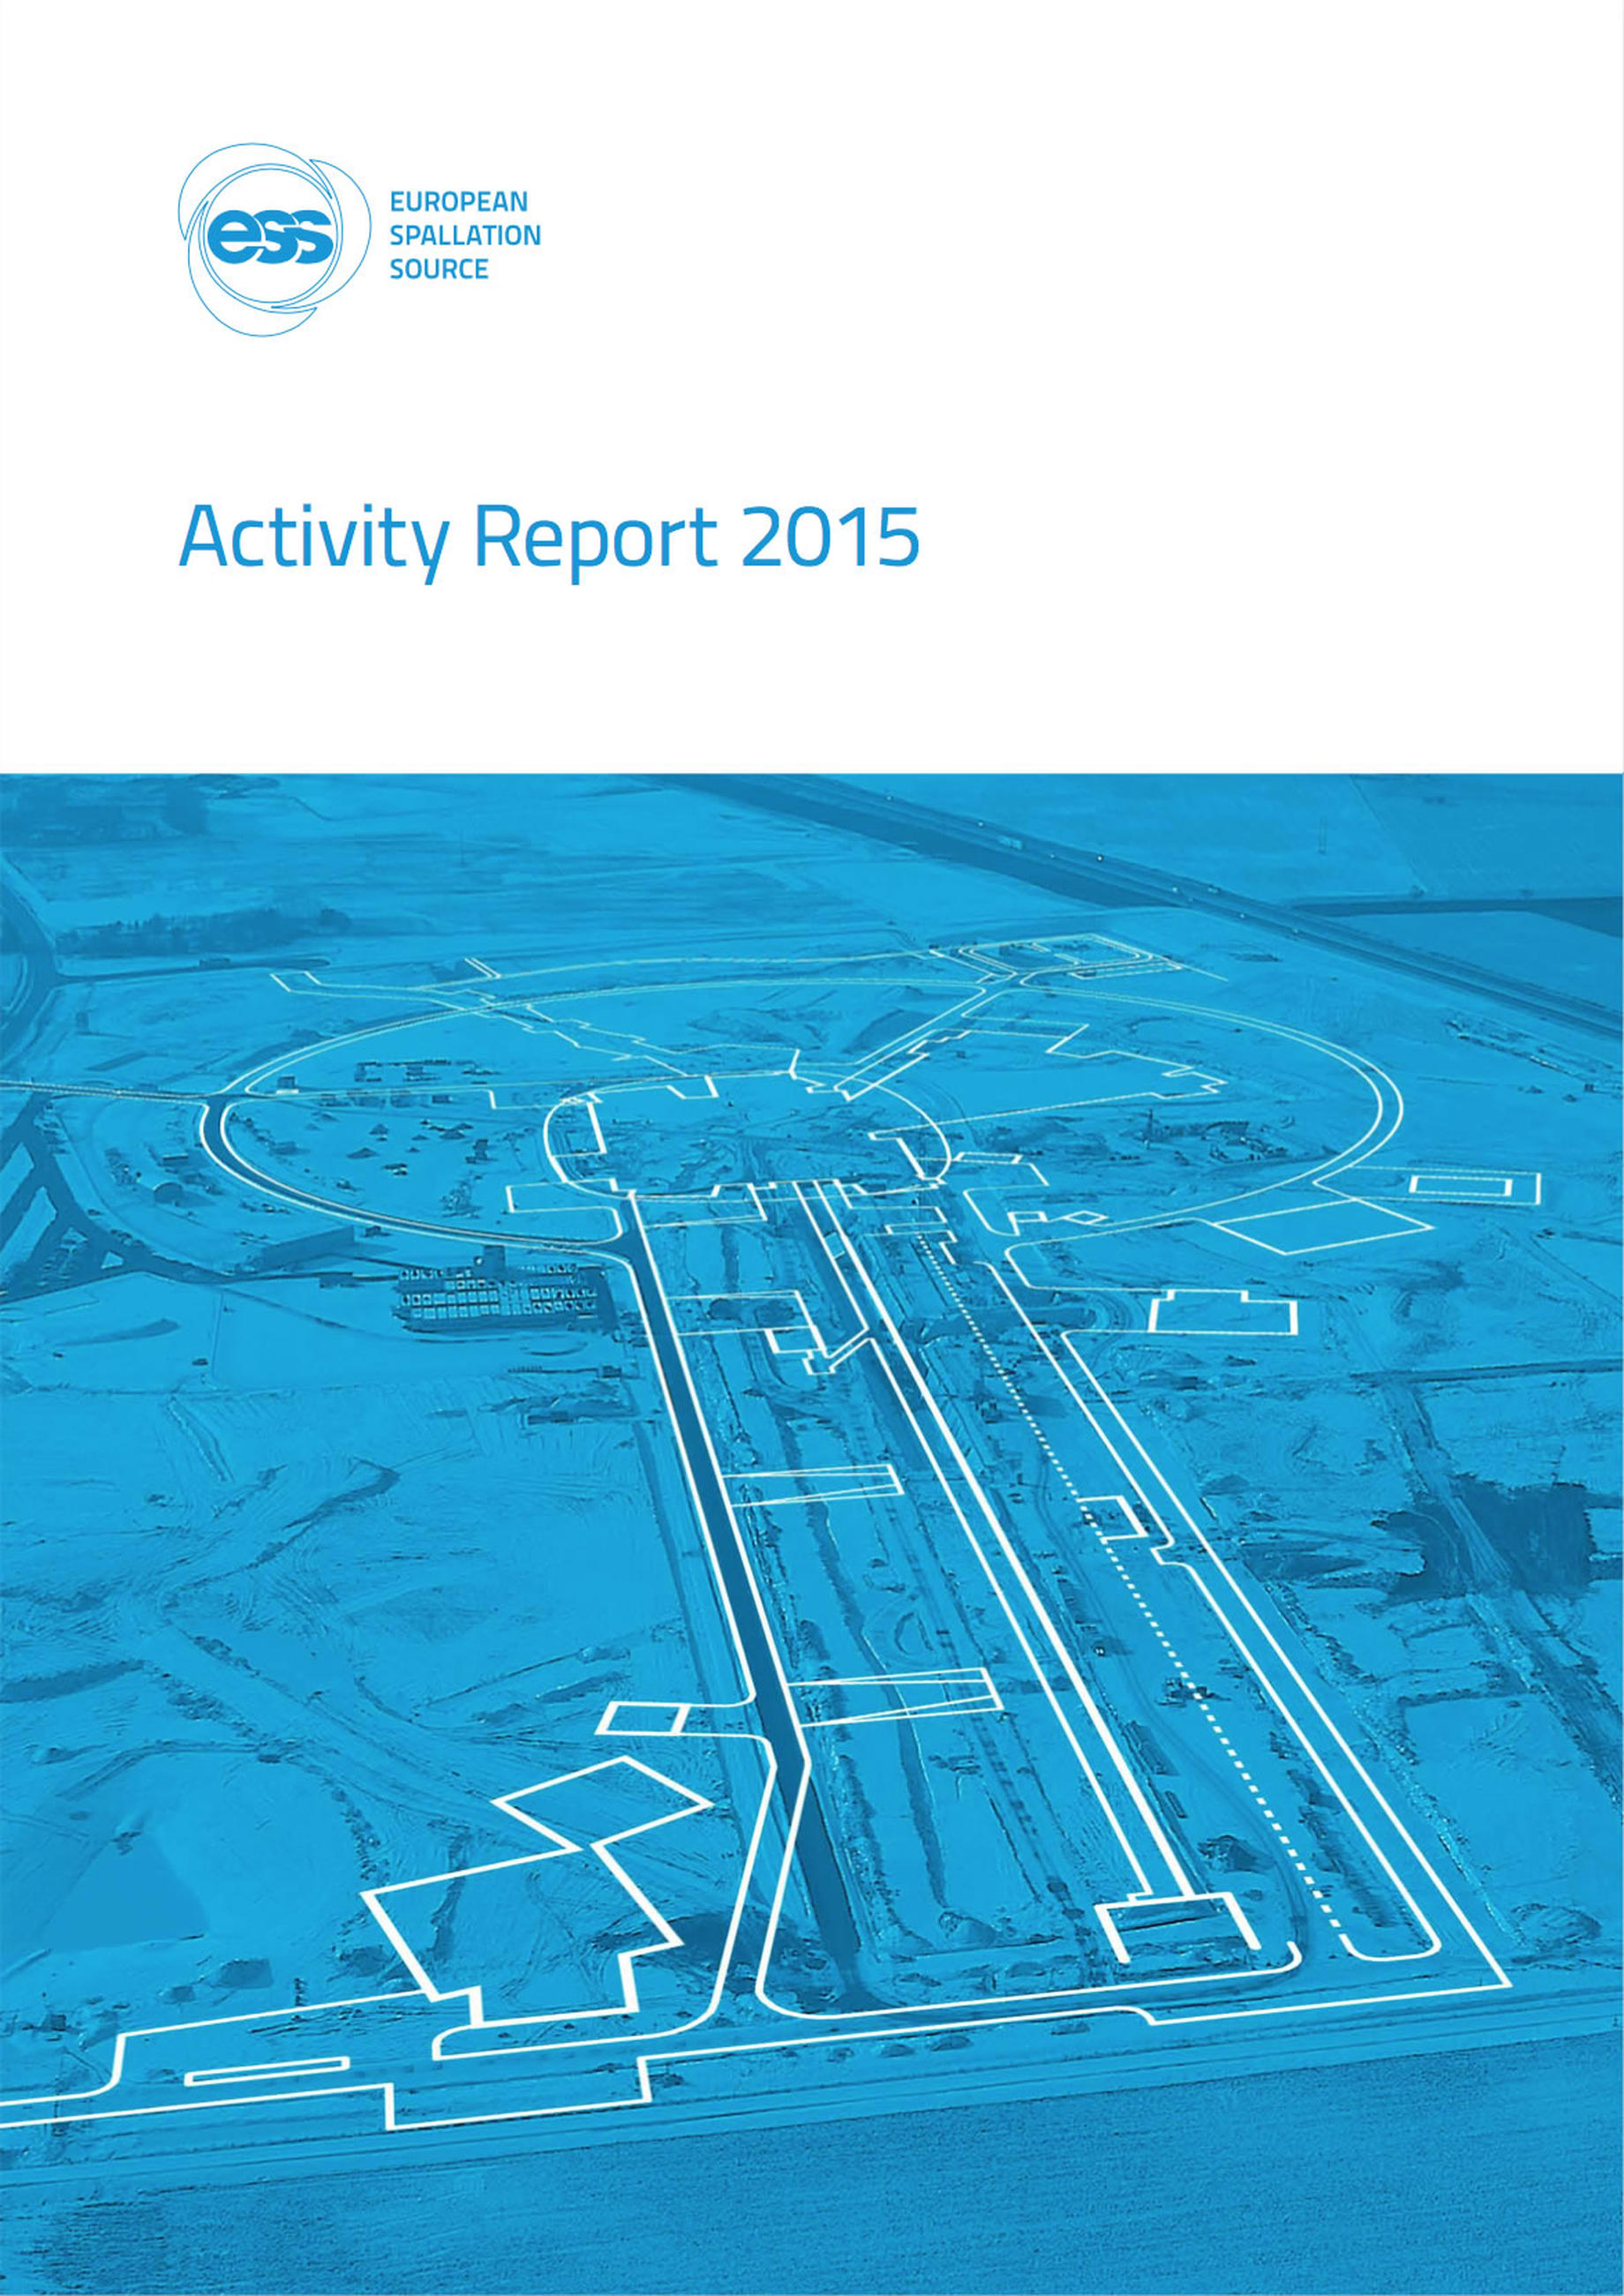 ActivityReport2014_2015_cover.jpg